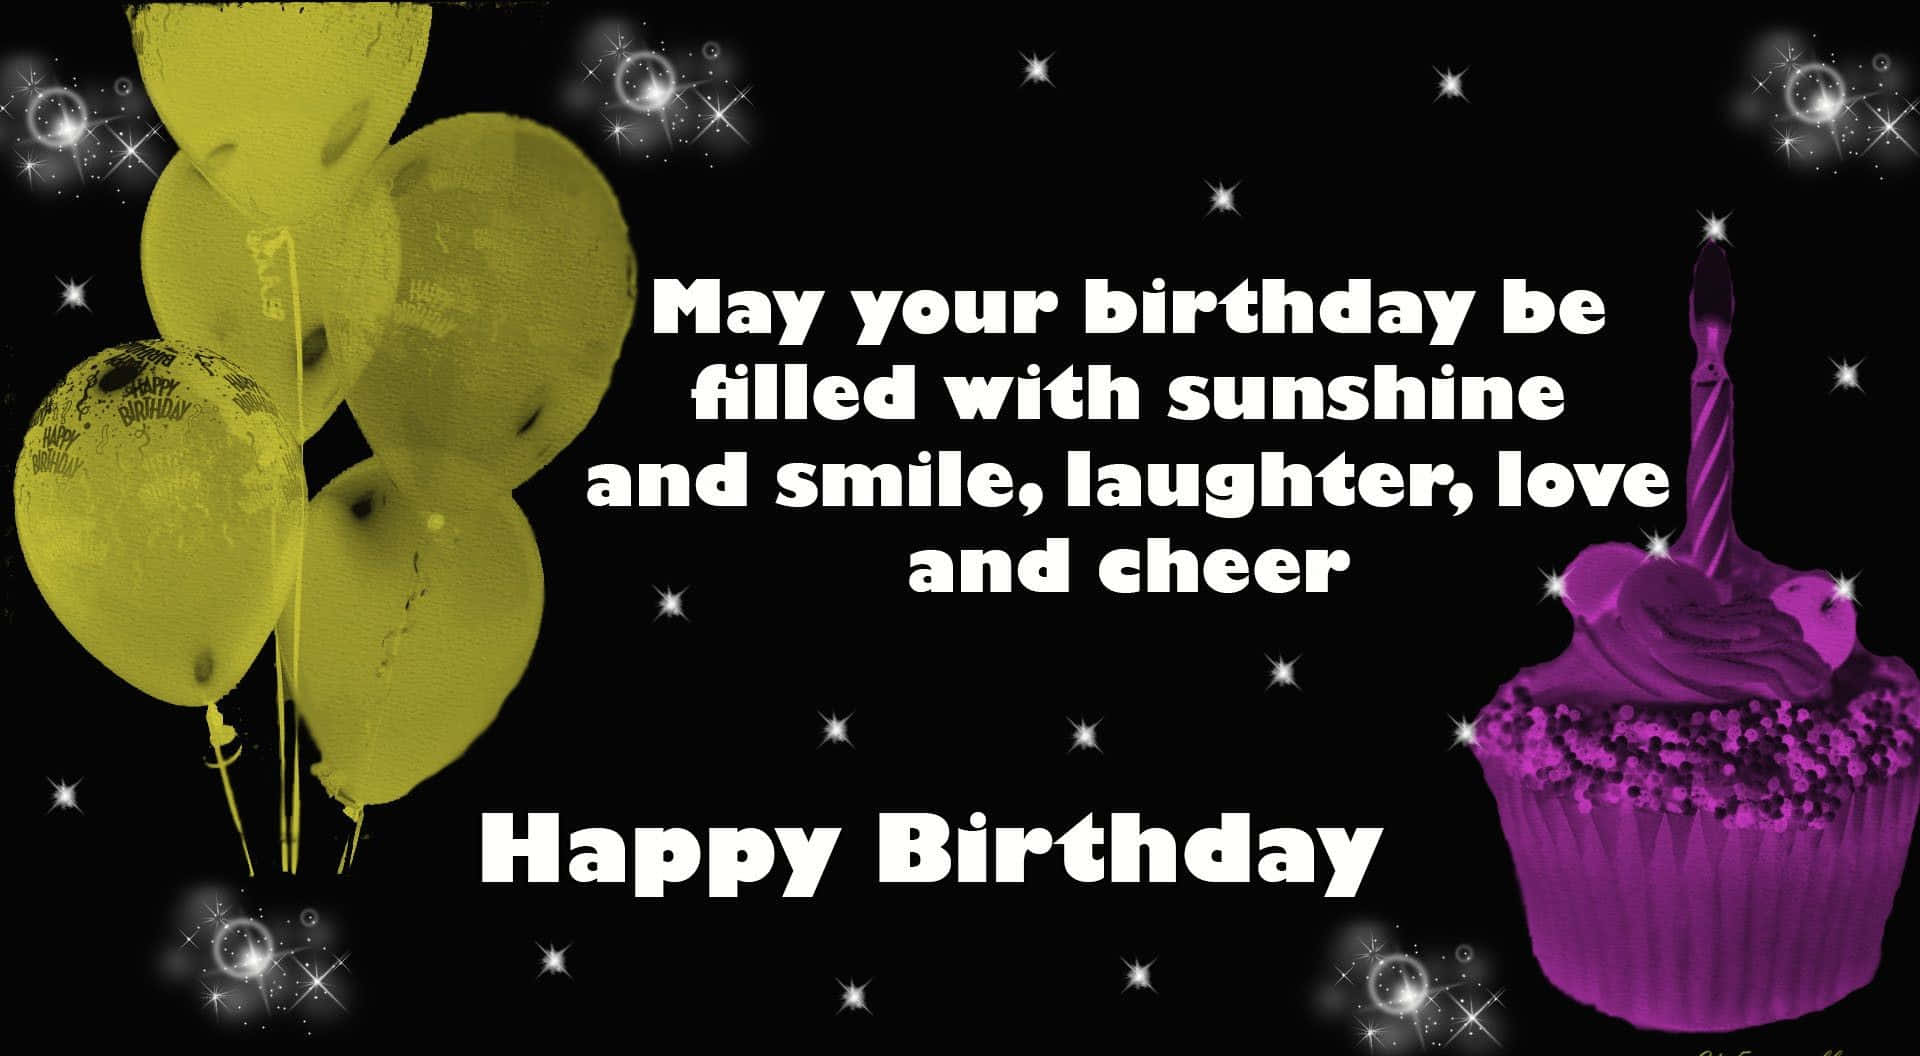 "Wishing You the Happiest of Birthdays!"